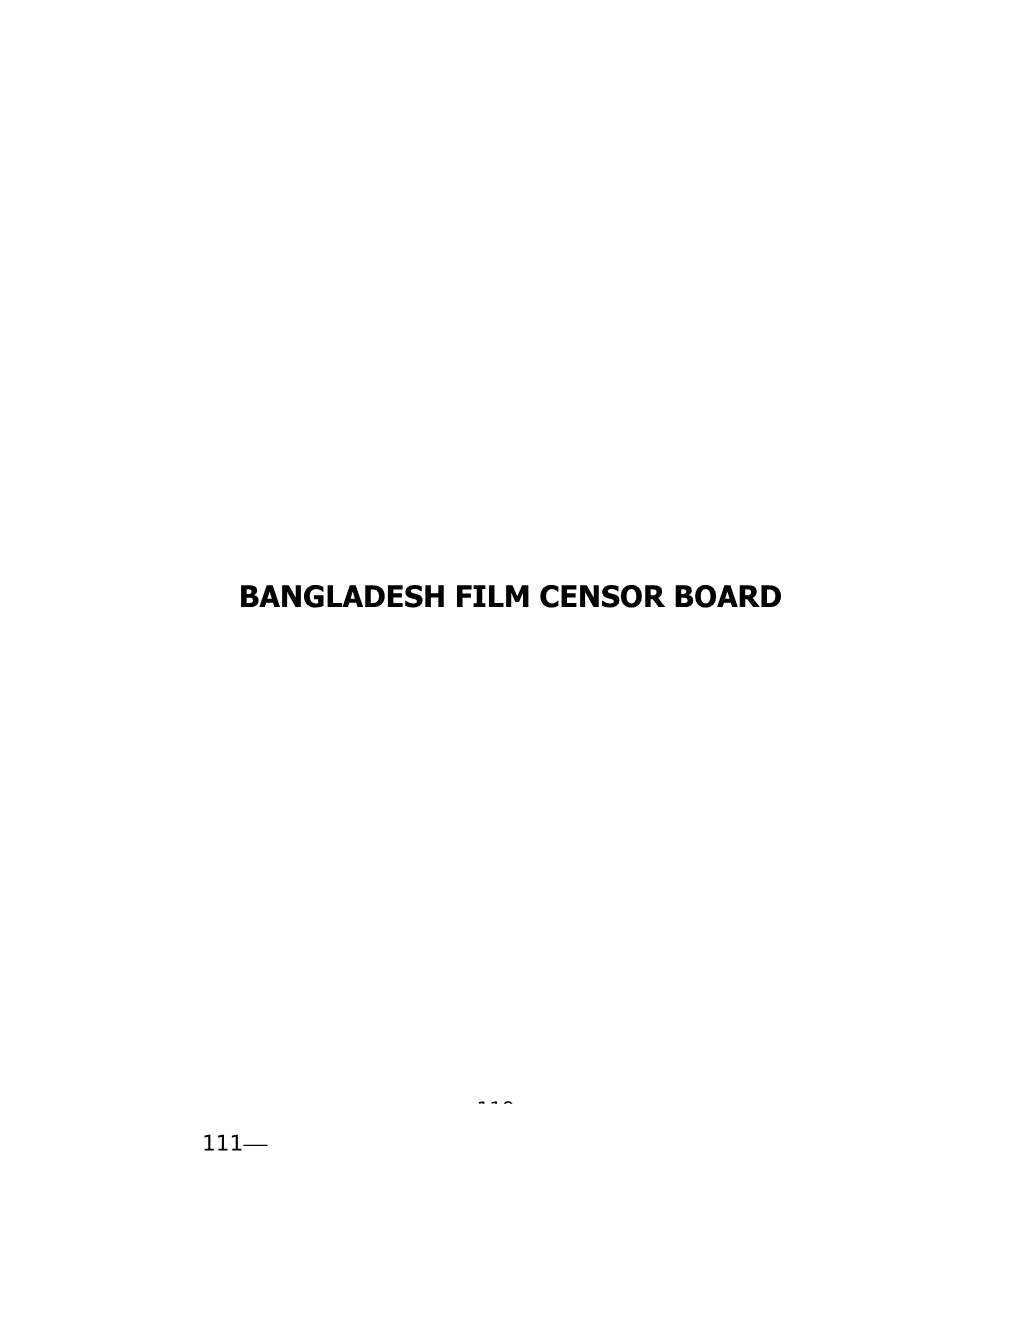 Bangladesh Film Censor Board